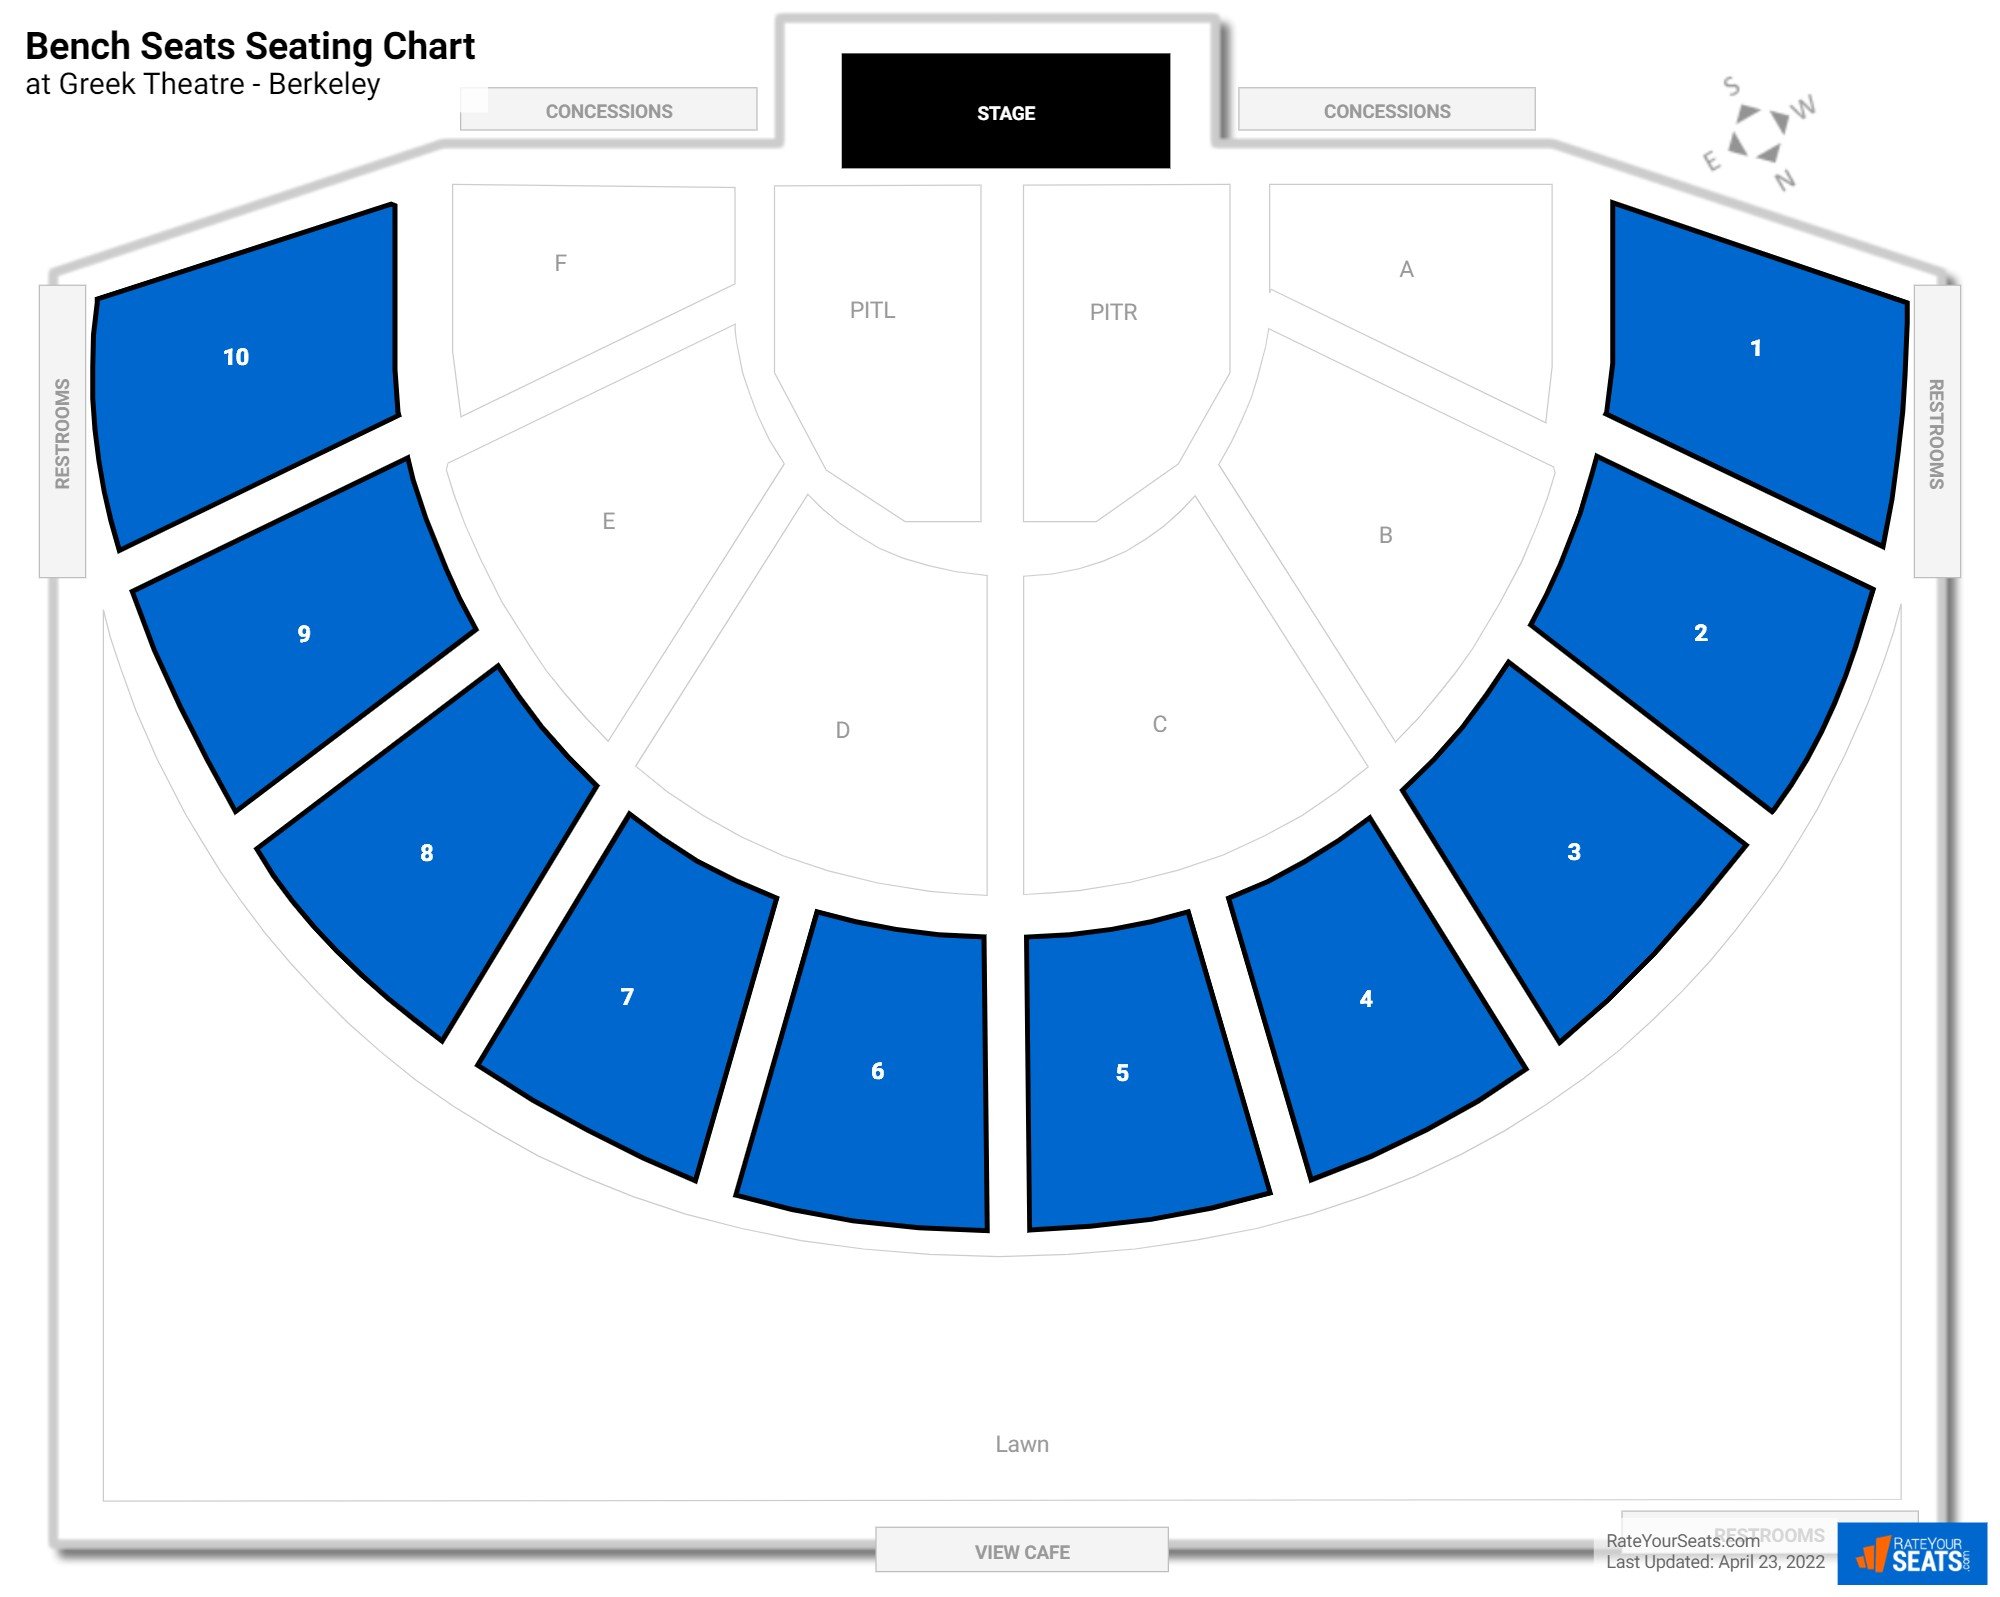 Concert Bench Seats Seating Chart at Greek Theatre - Berkeley